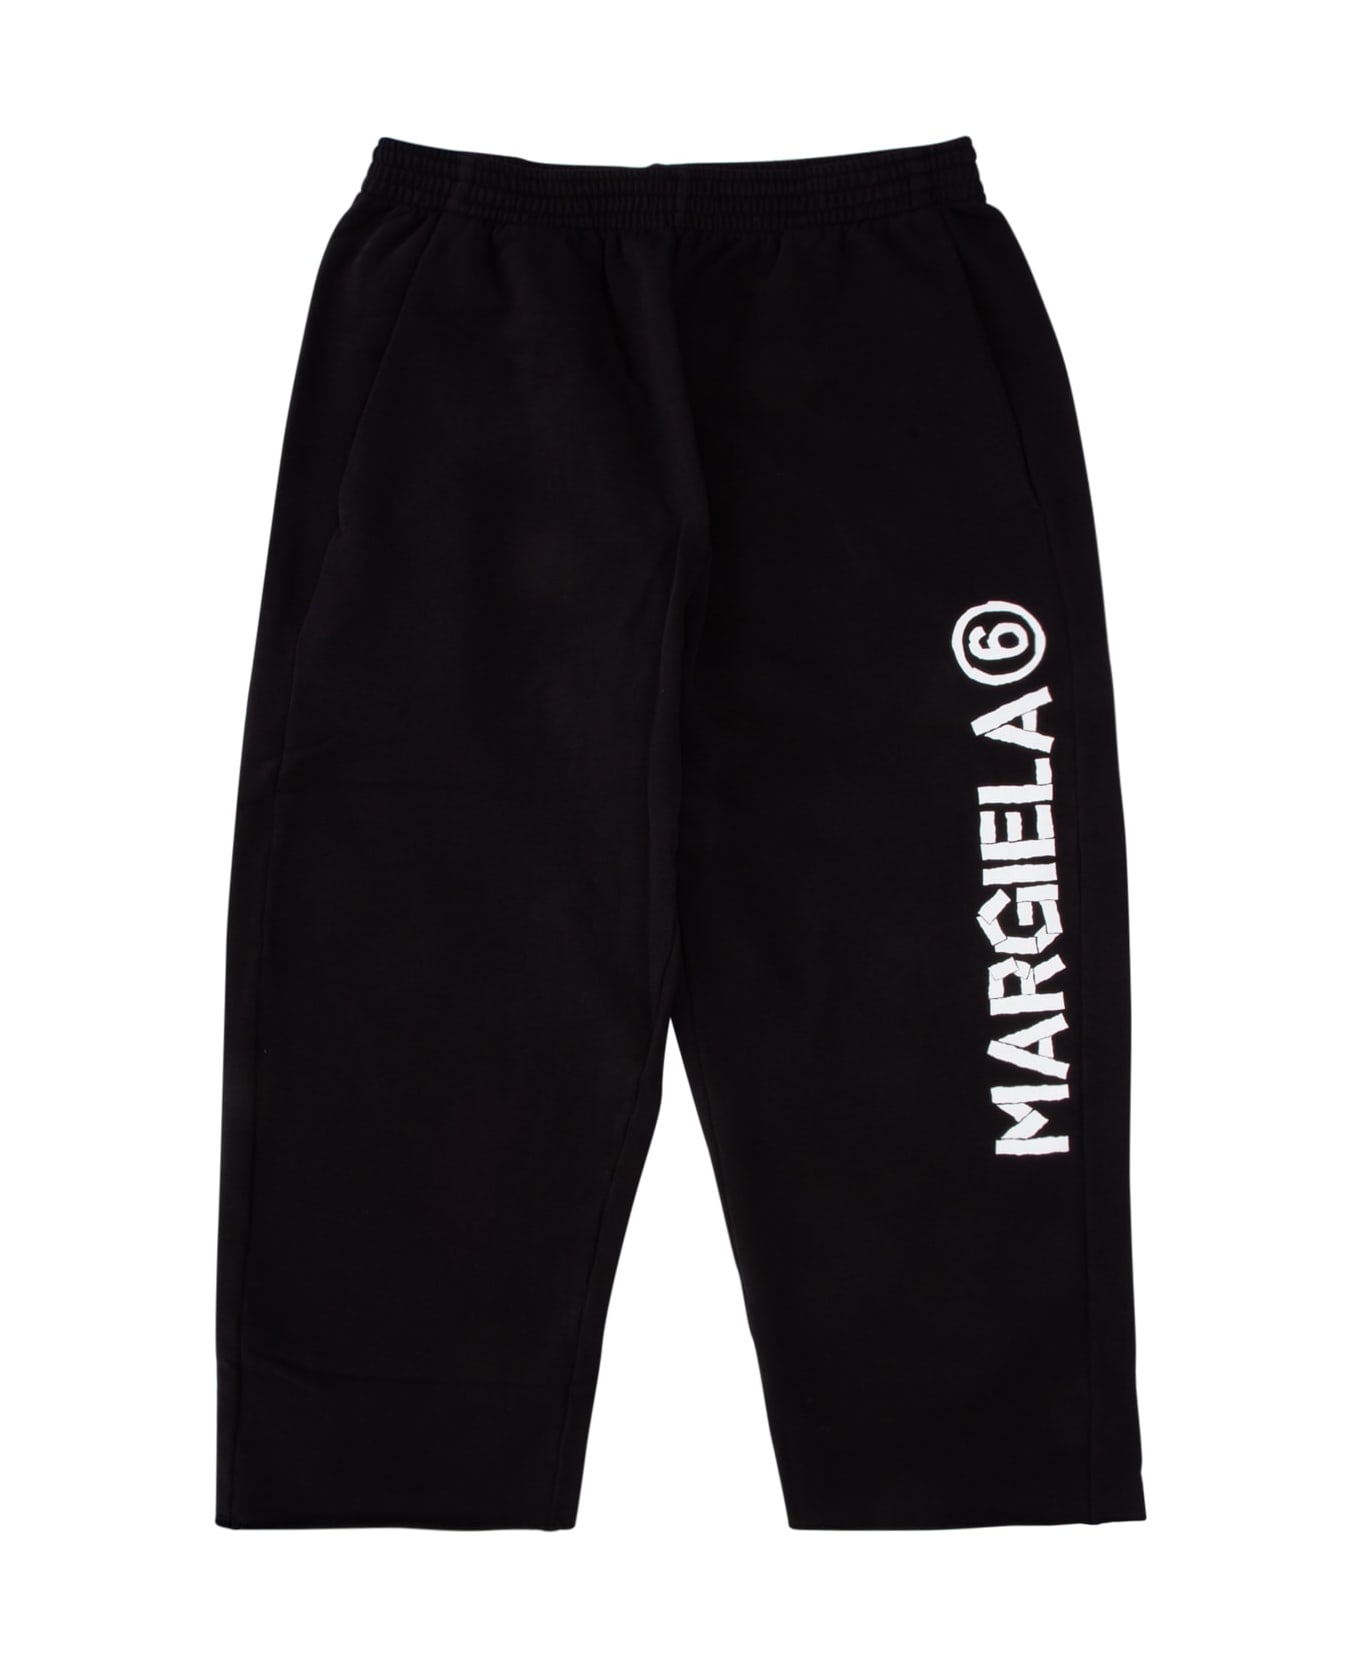 MM6 Maison Margiela Pantalone - M6900 ボトムス